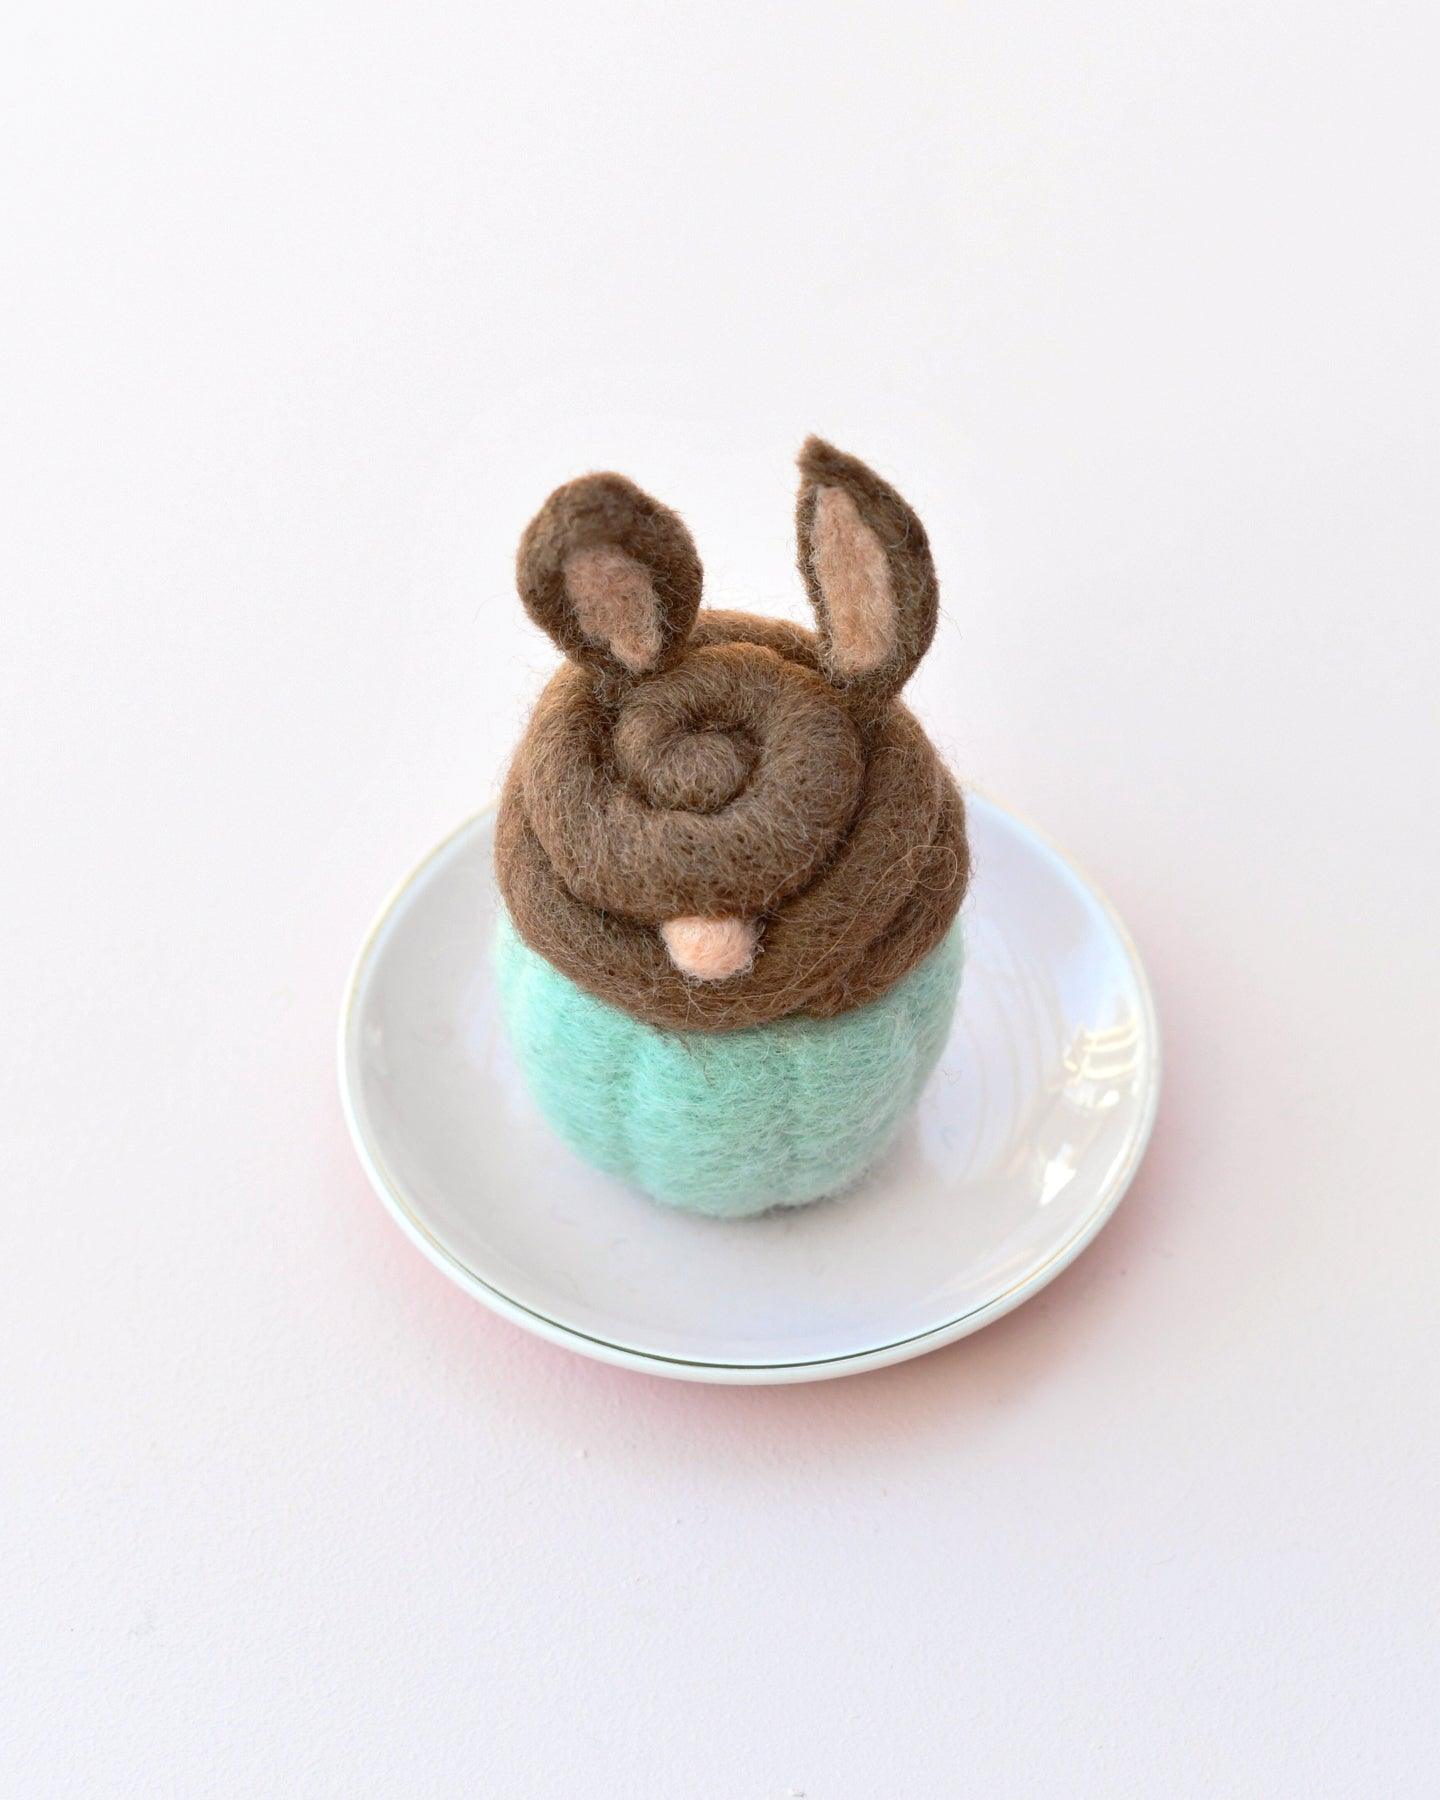 Felt Cupcake - Easter Chocolate Bunny with Ears